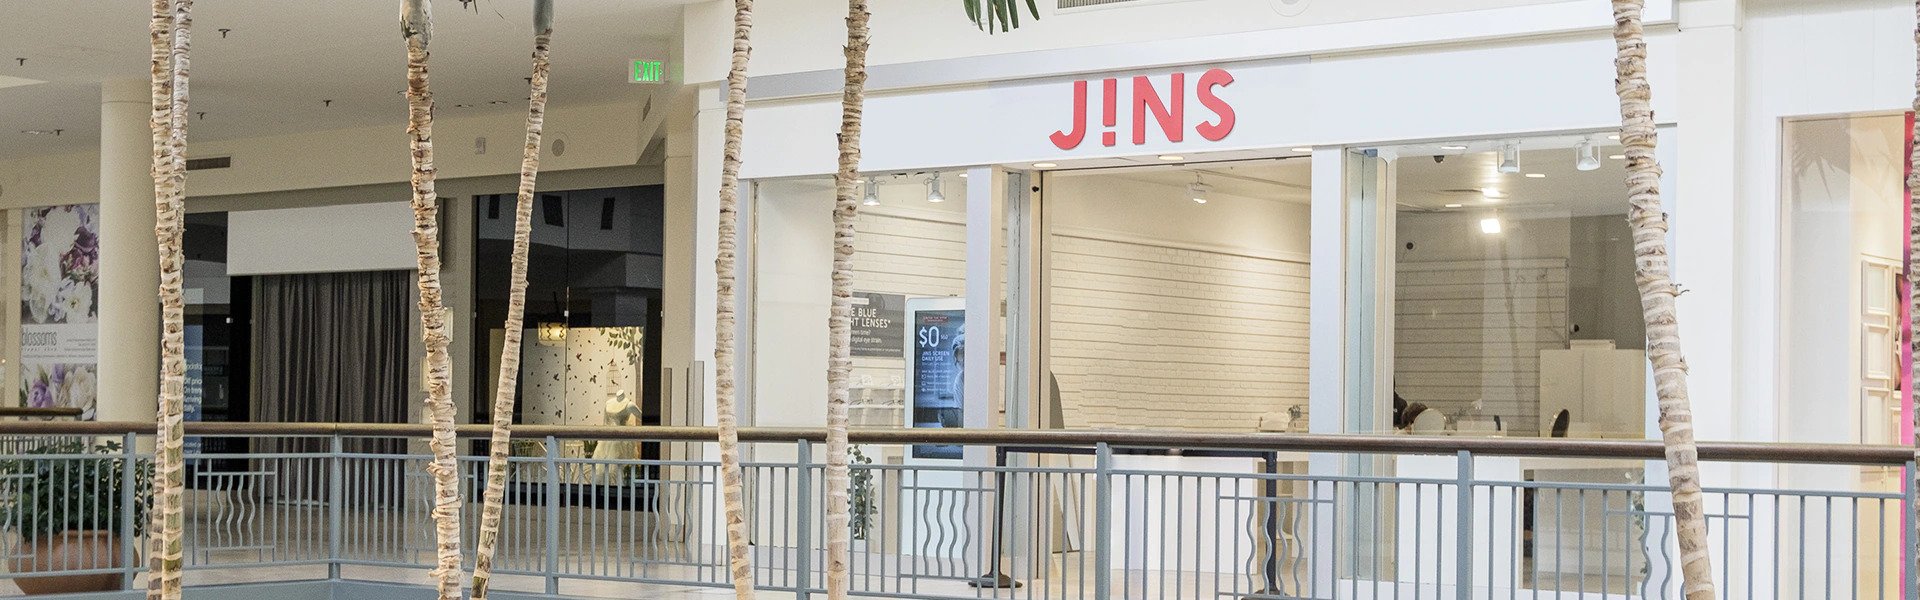 JINS Eyewear Store in Union Square, San Francisco, California